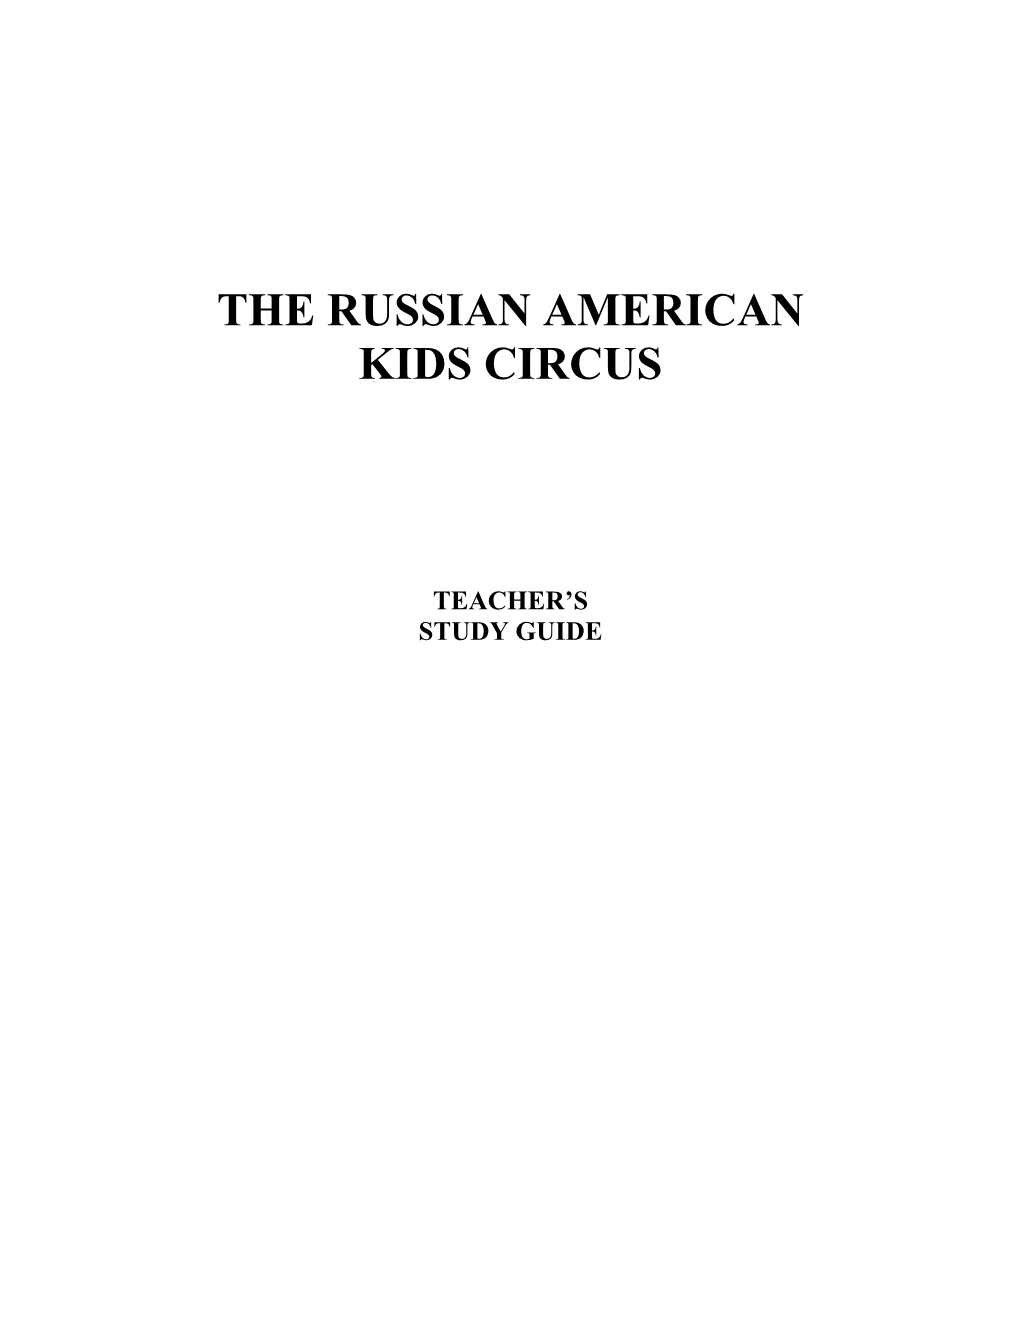 The Russian American Kids Circus